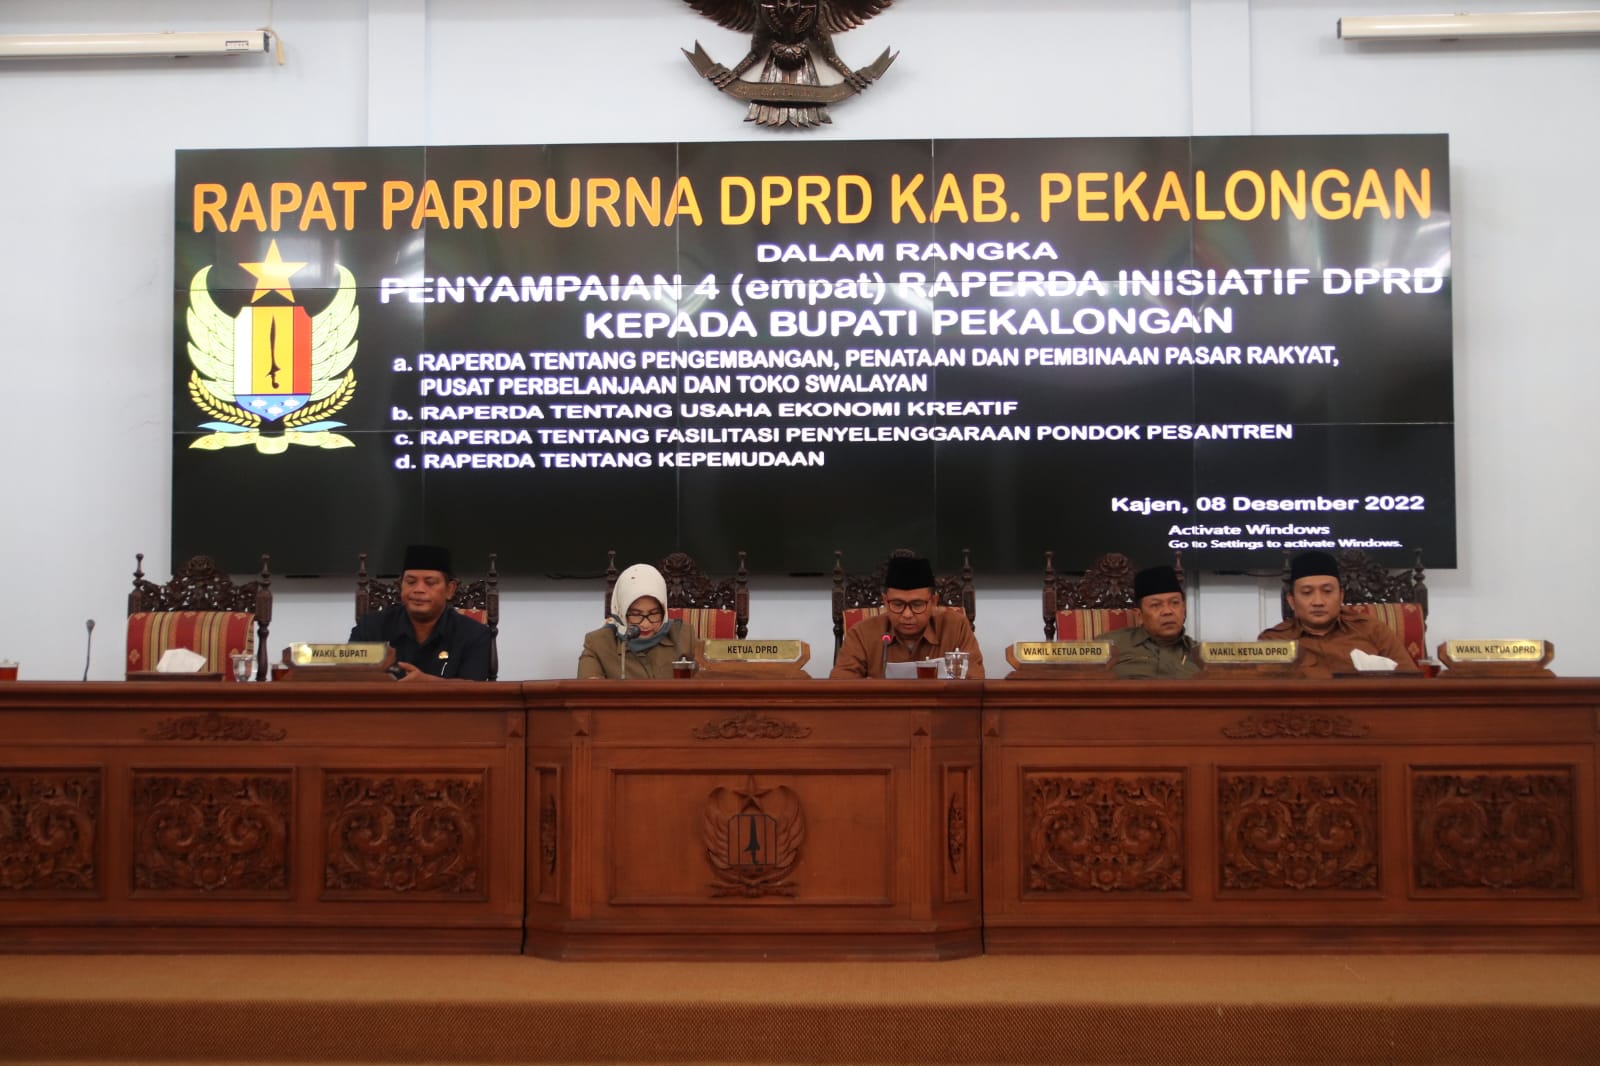 PARIPURNA Penyampaian Empat Raperda Inisiatif DPRD Kabupaten Pekalongan